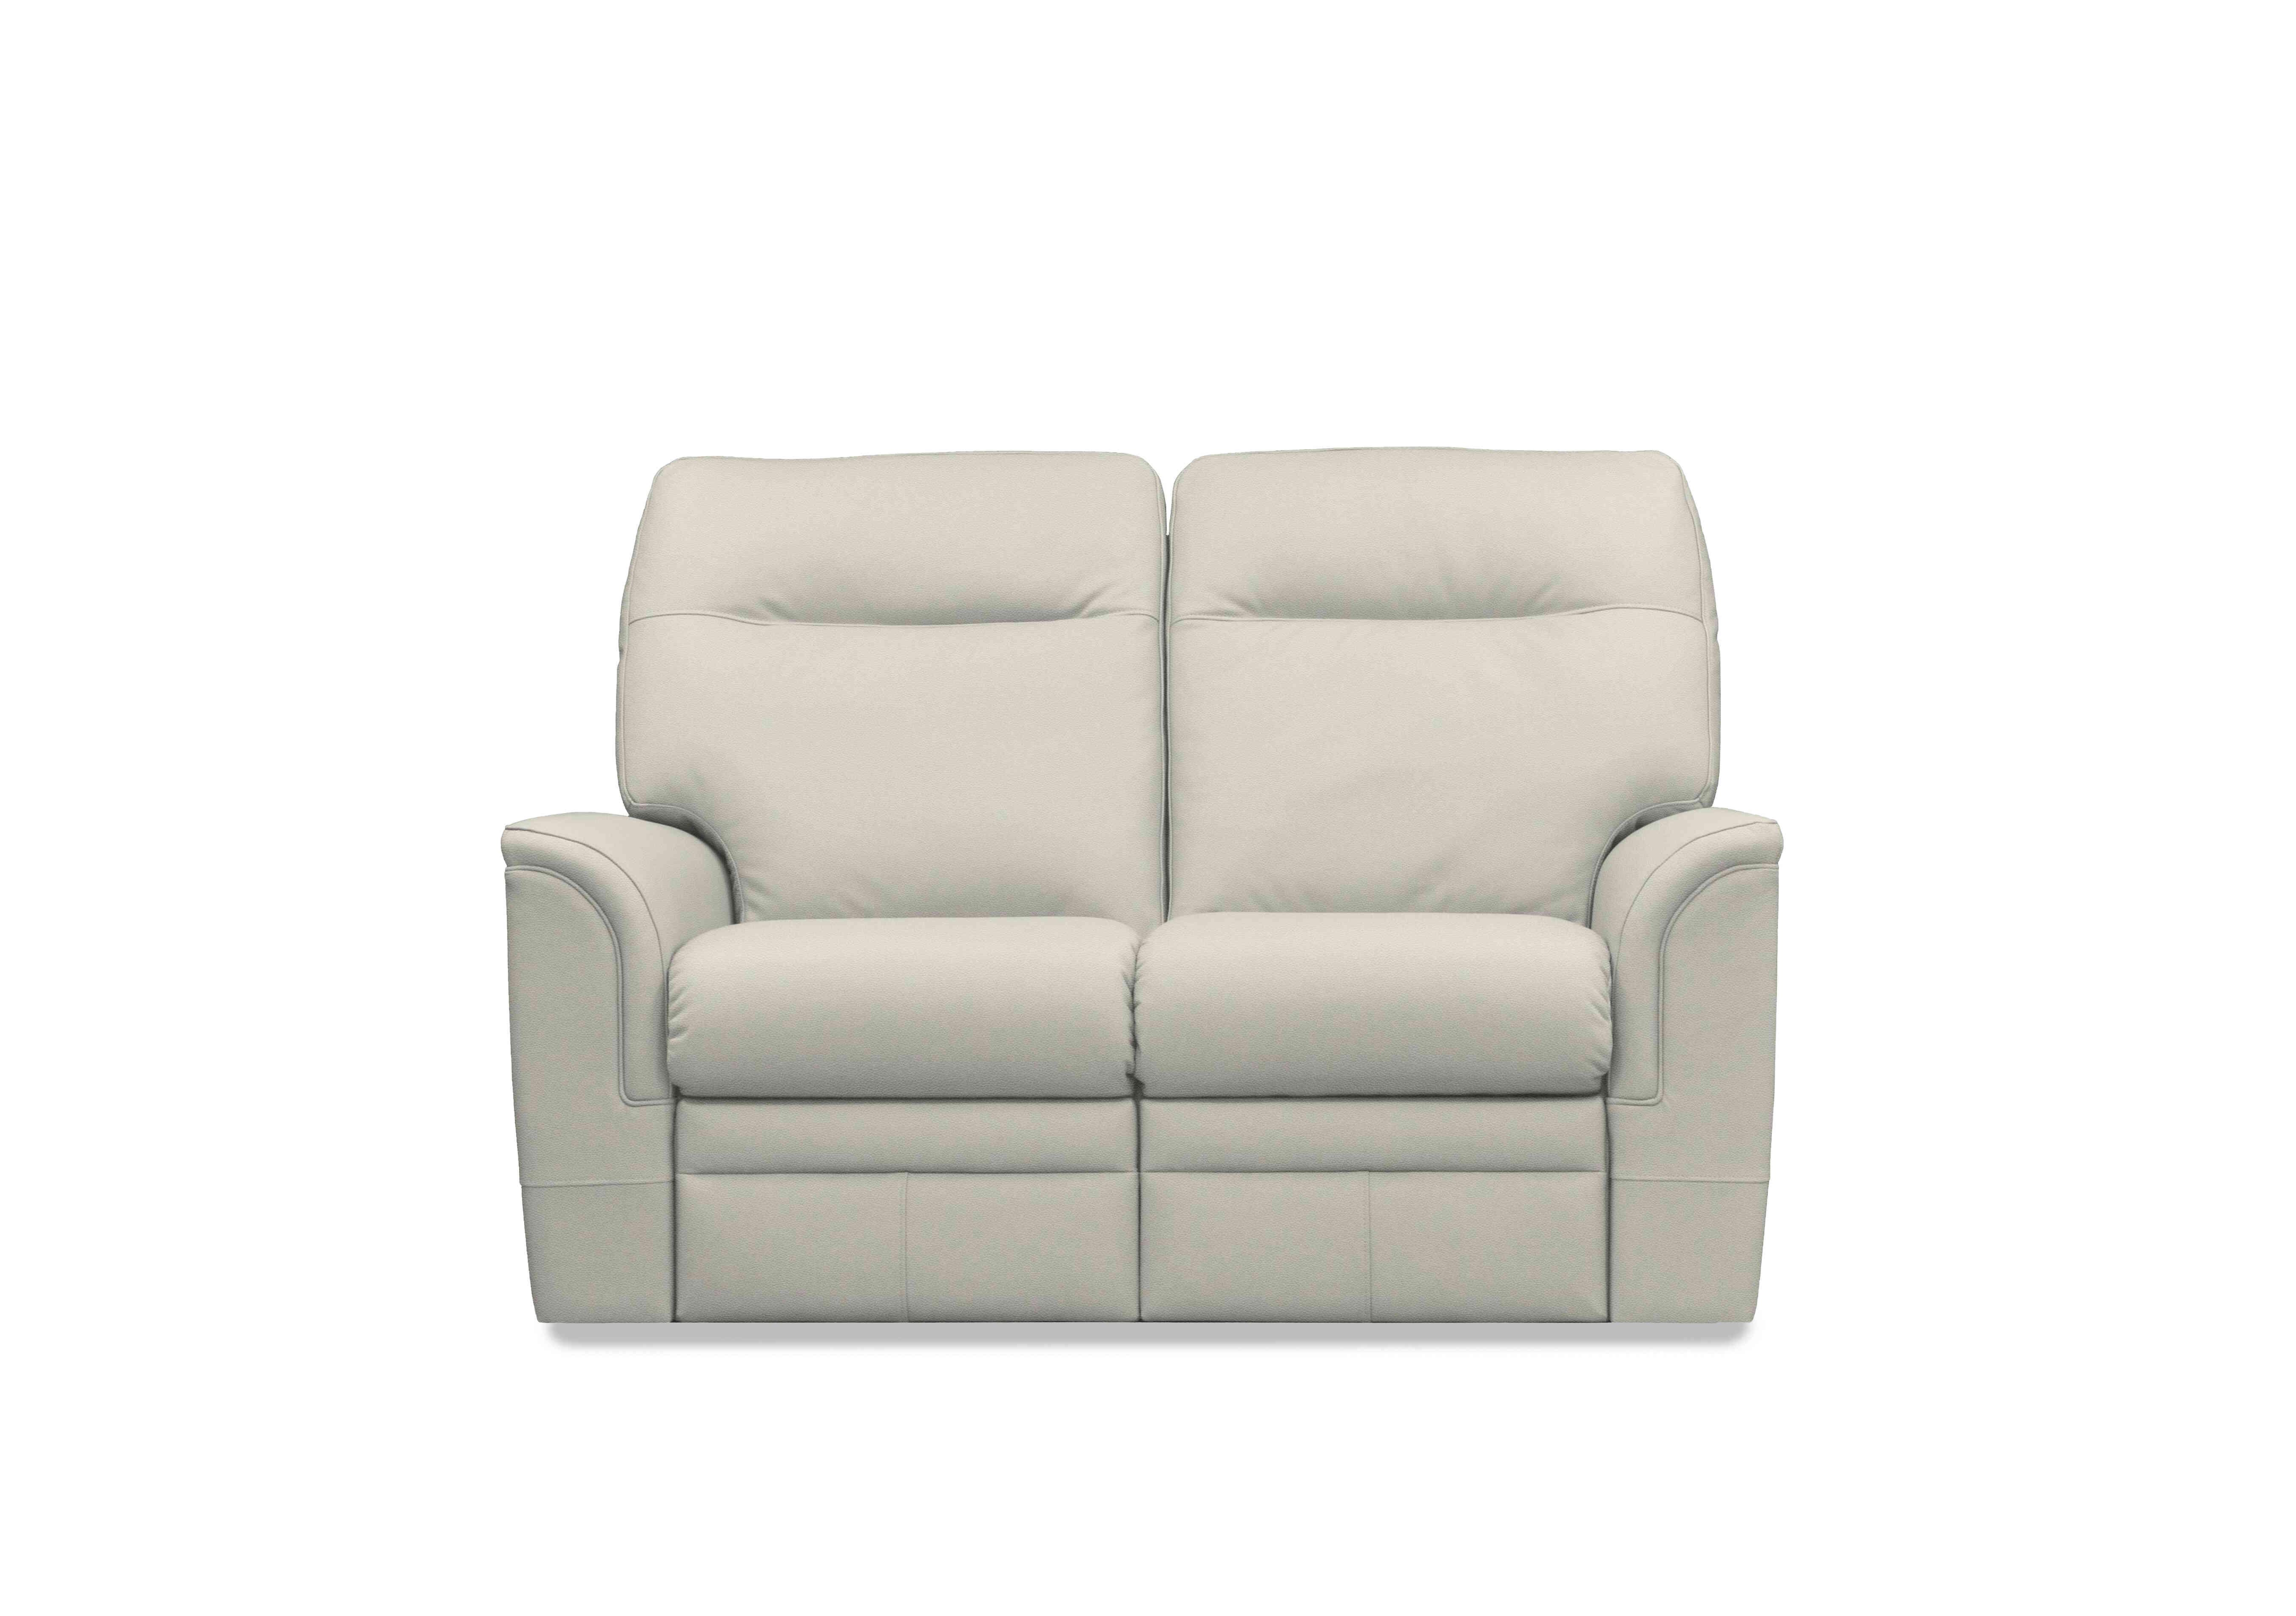 Hudson 23 Leather 2 Seater Sofa in Como Dove 0053051-0092 on Furniture Village